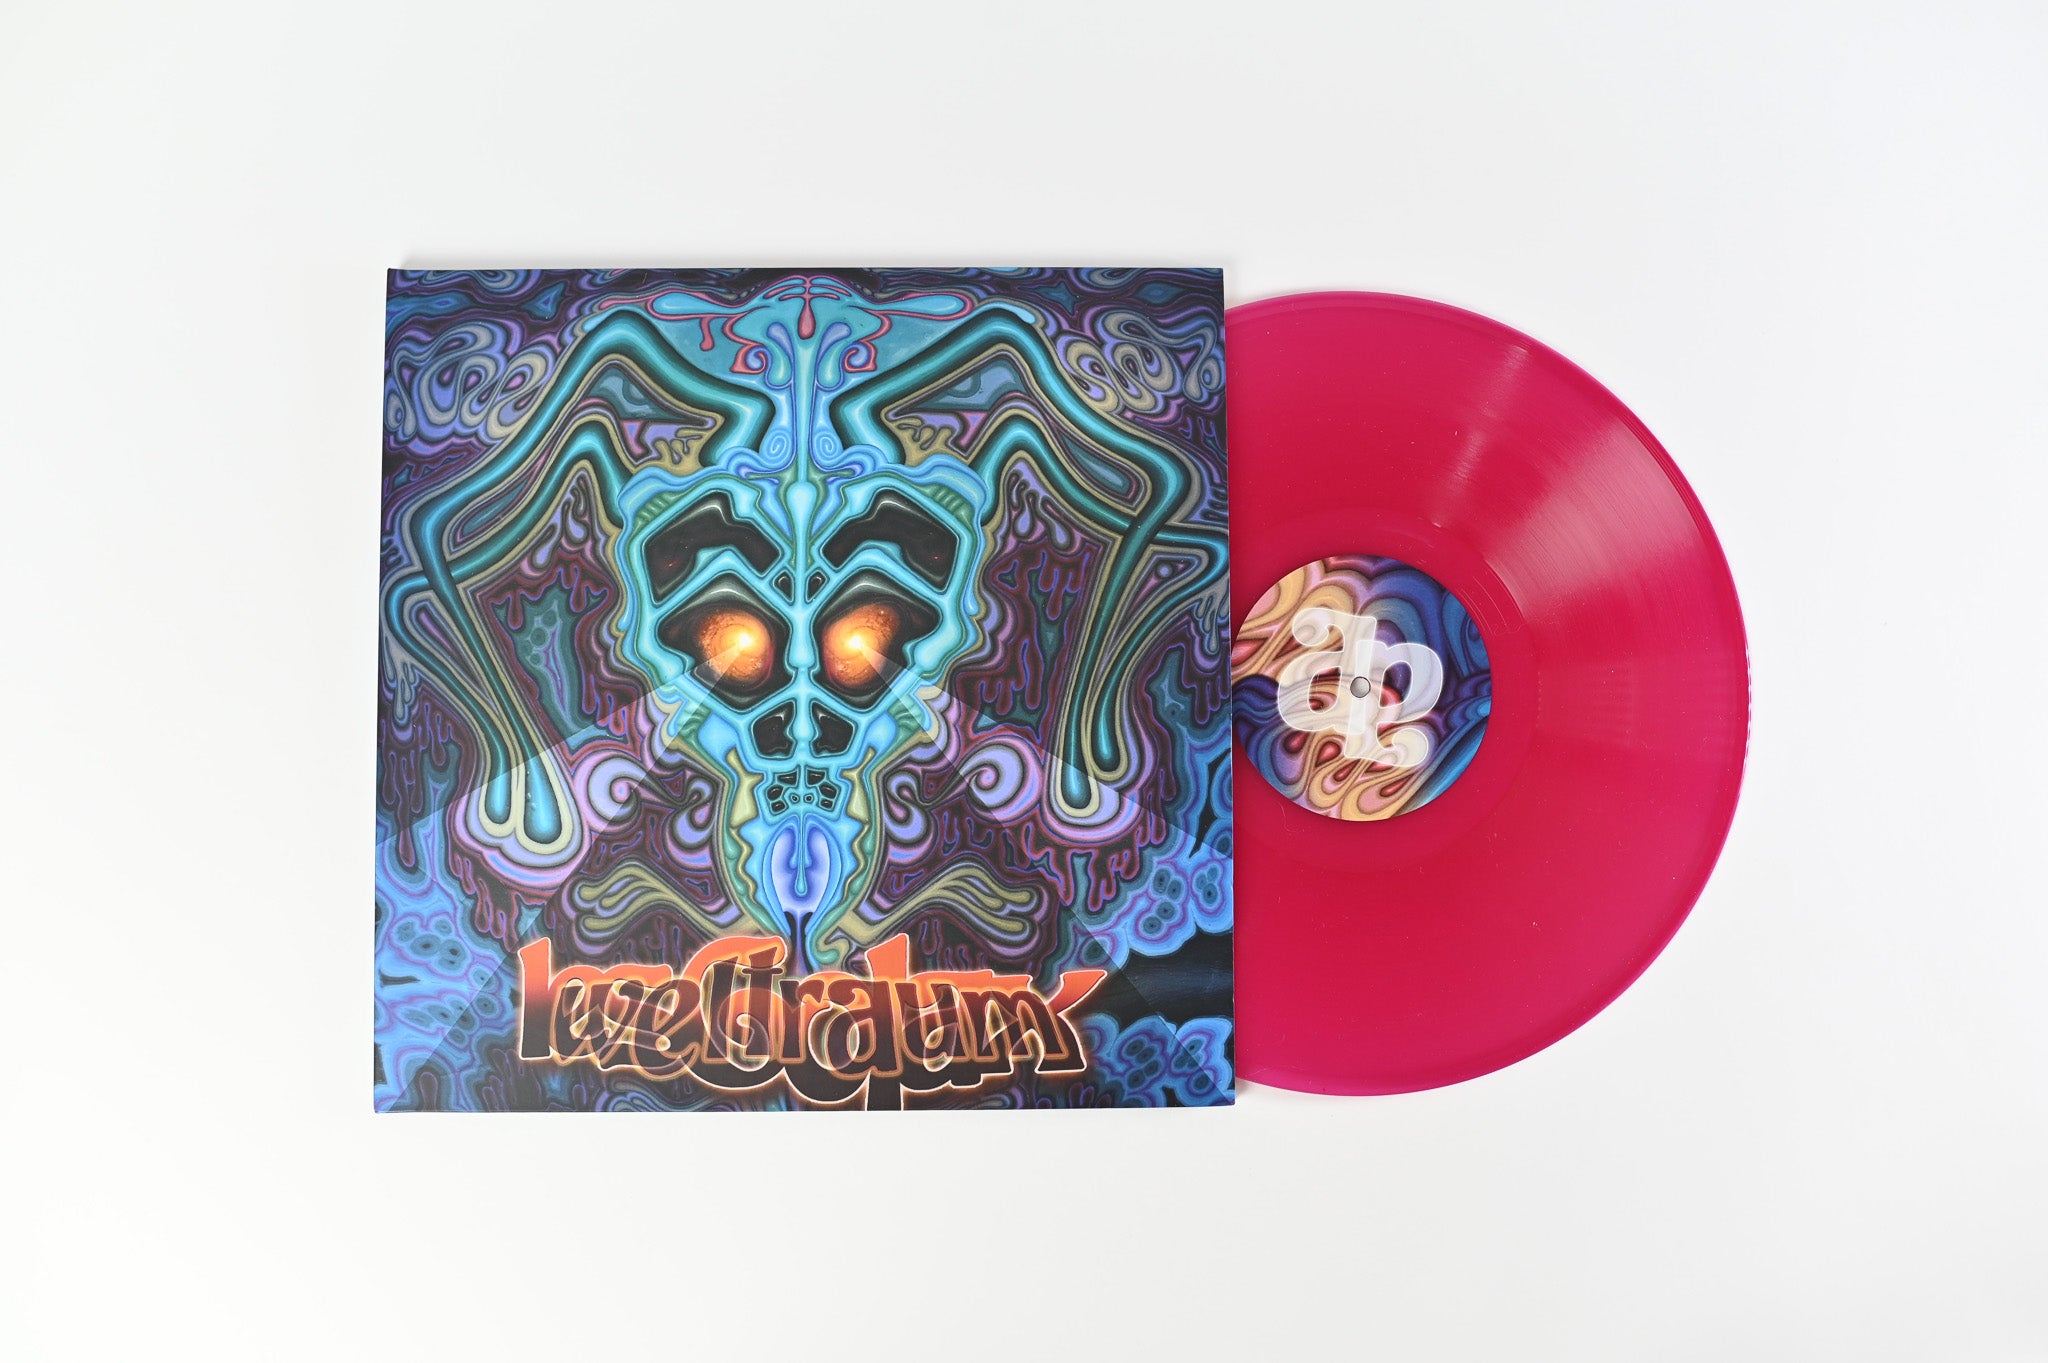 Weltraum - Les Golax on Nosani Records Purple Translucent Vinyl